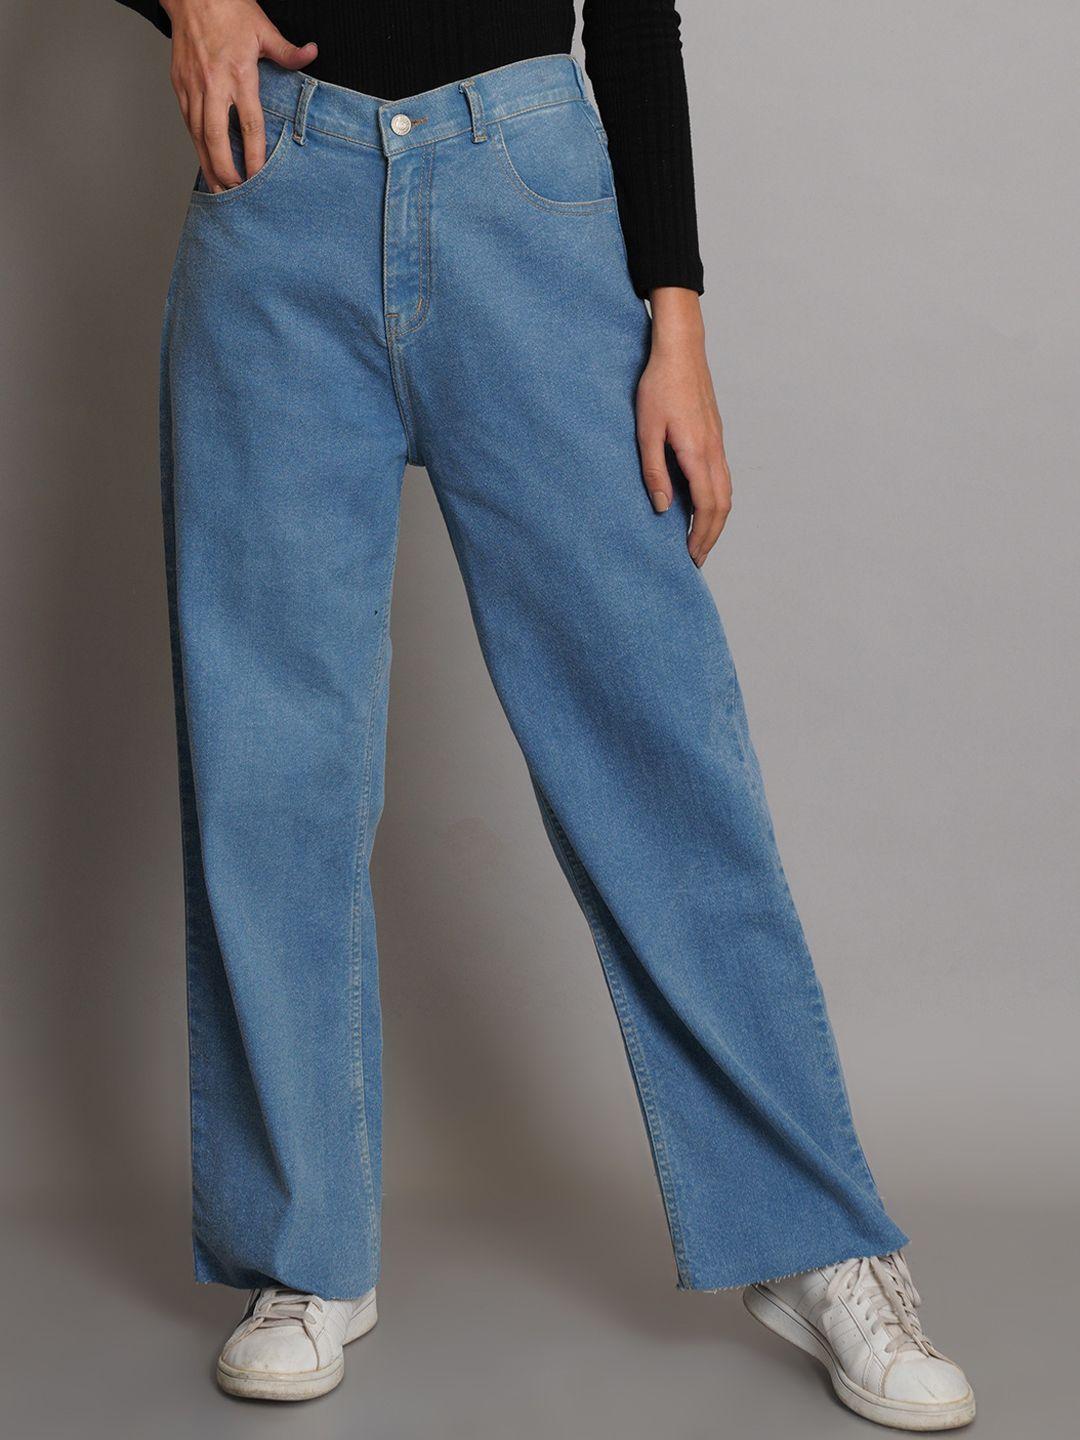 kotty women jean wide leg high-rise light fade stretchable jeans